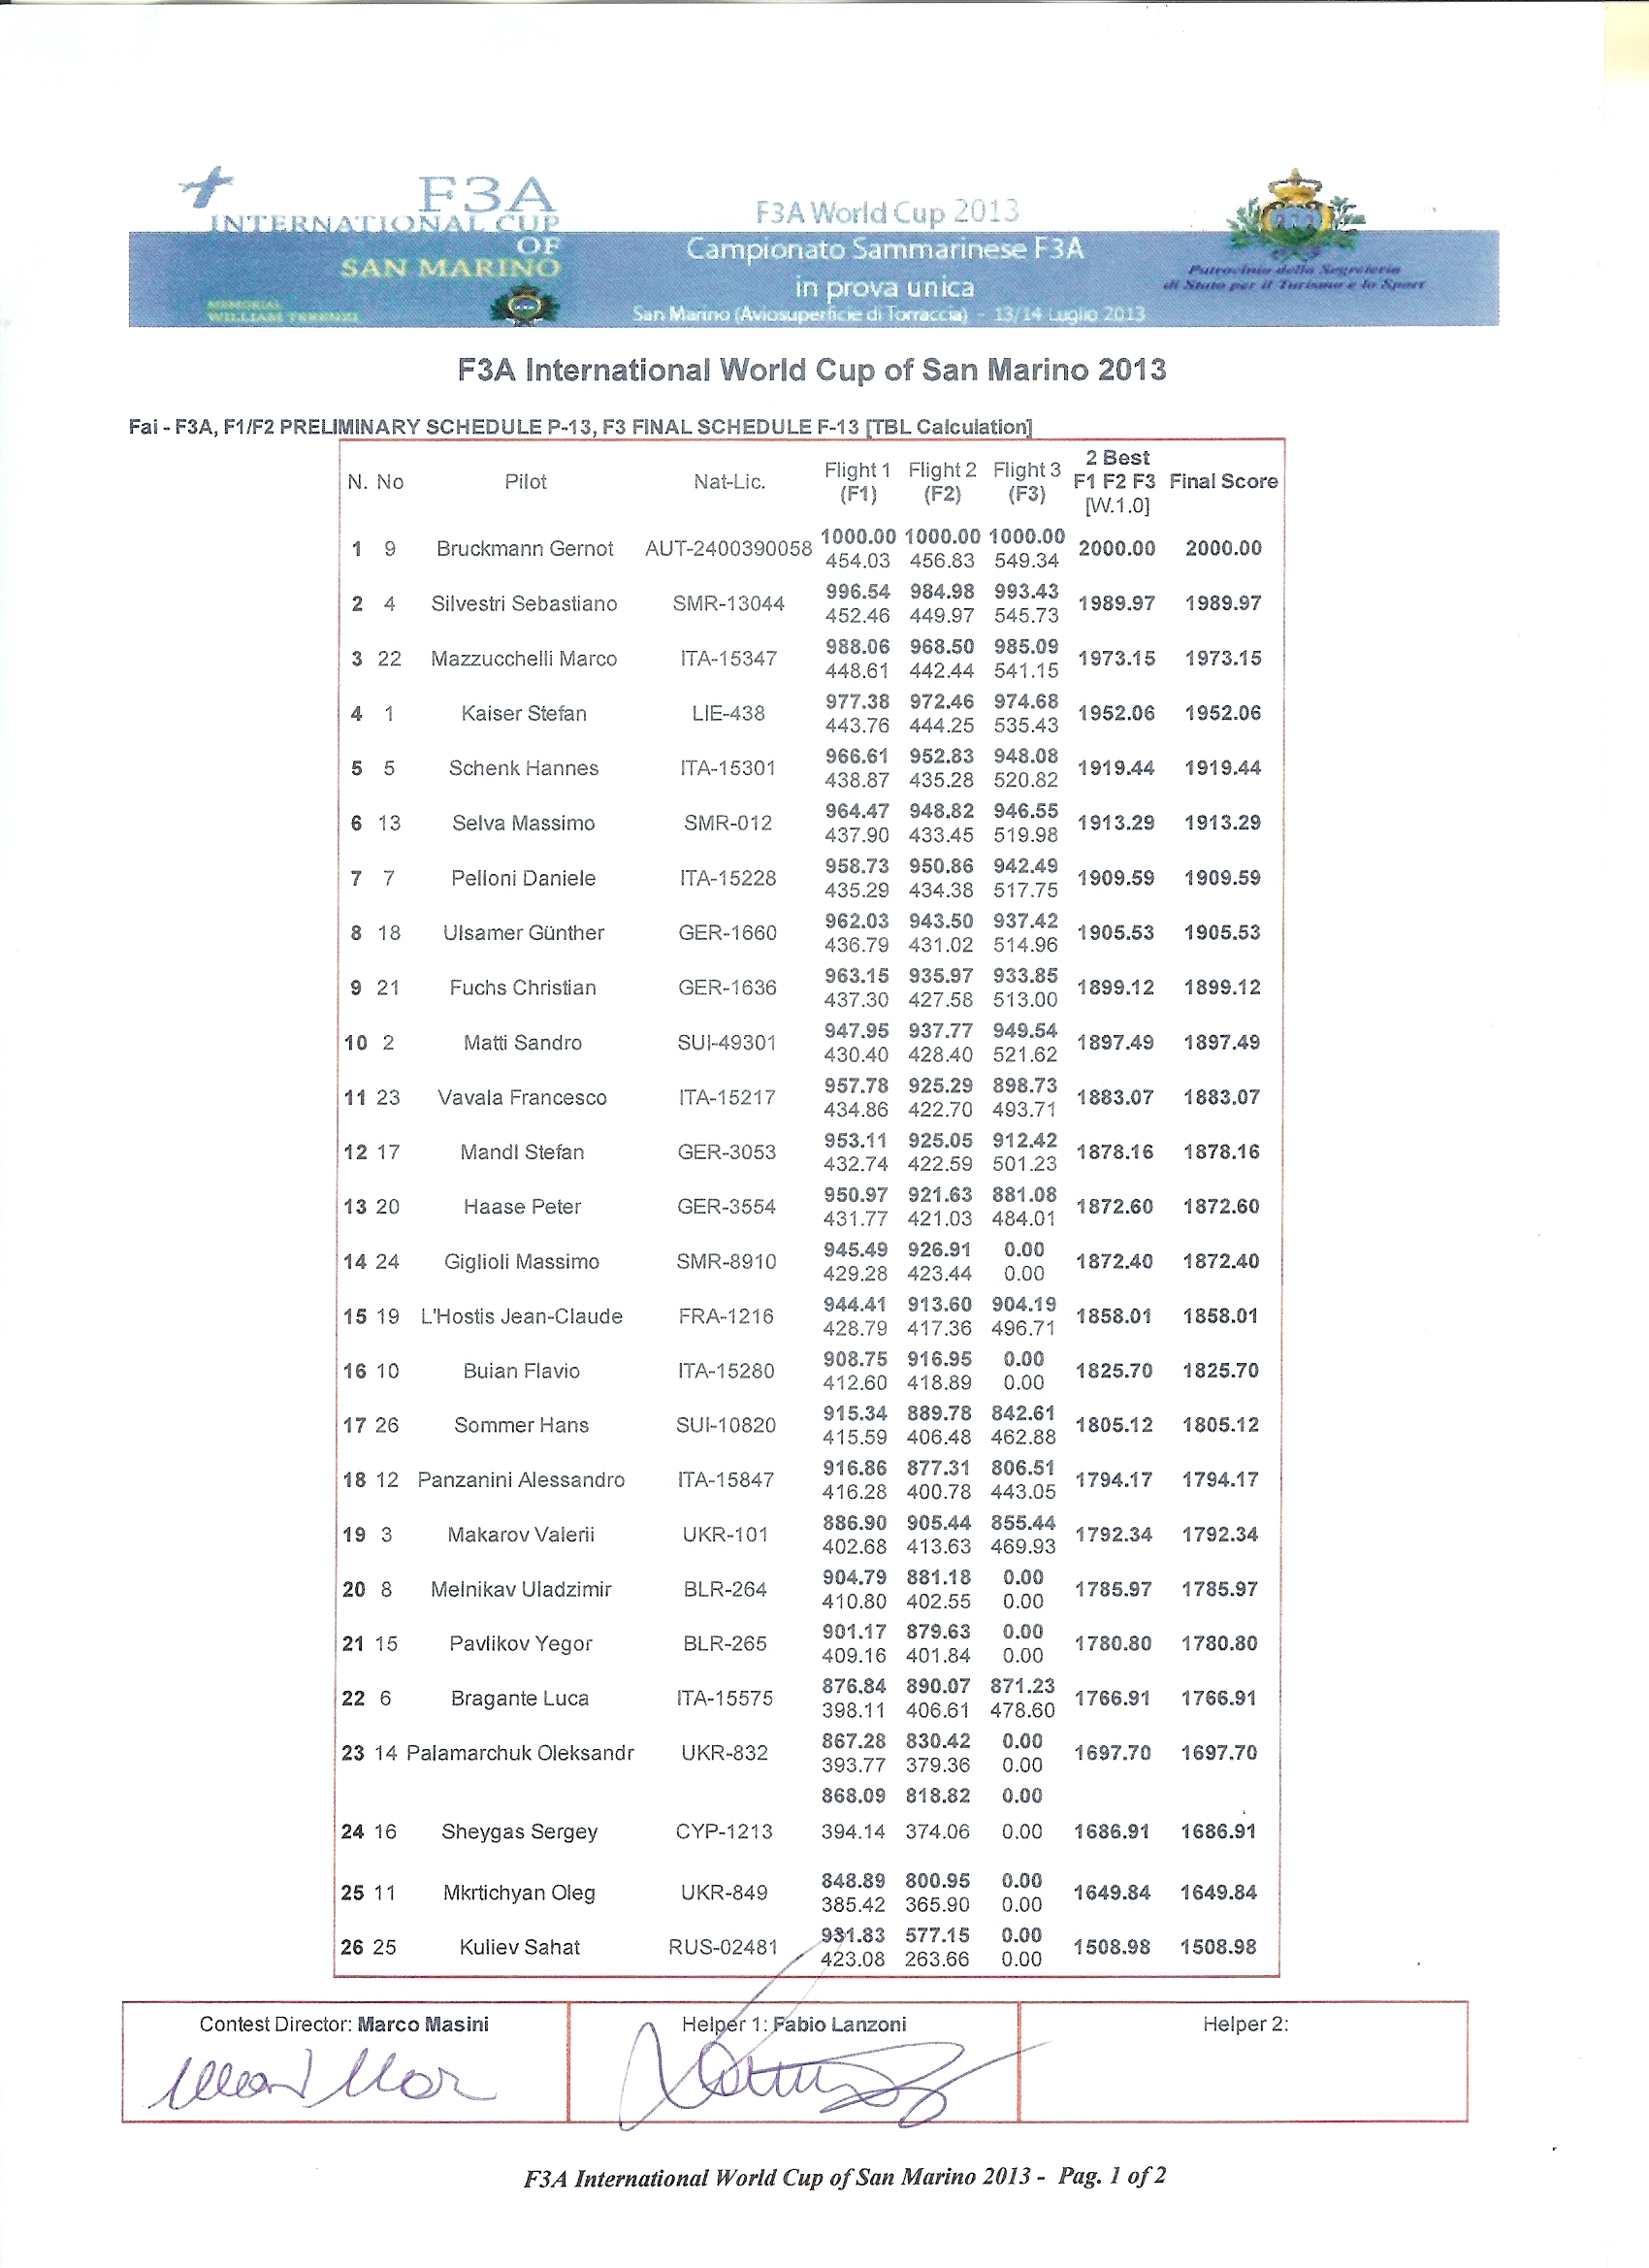 Live Scores – 32nd FAI F3A World Championship for Aerobatic Model Aircraft  – 19-26 August – Warwick, Australia